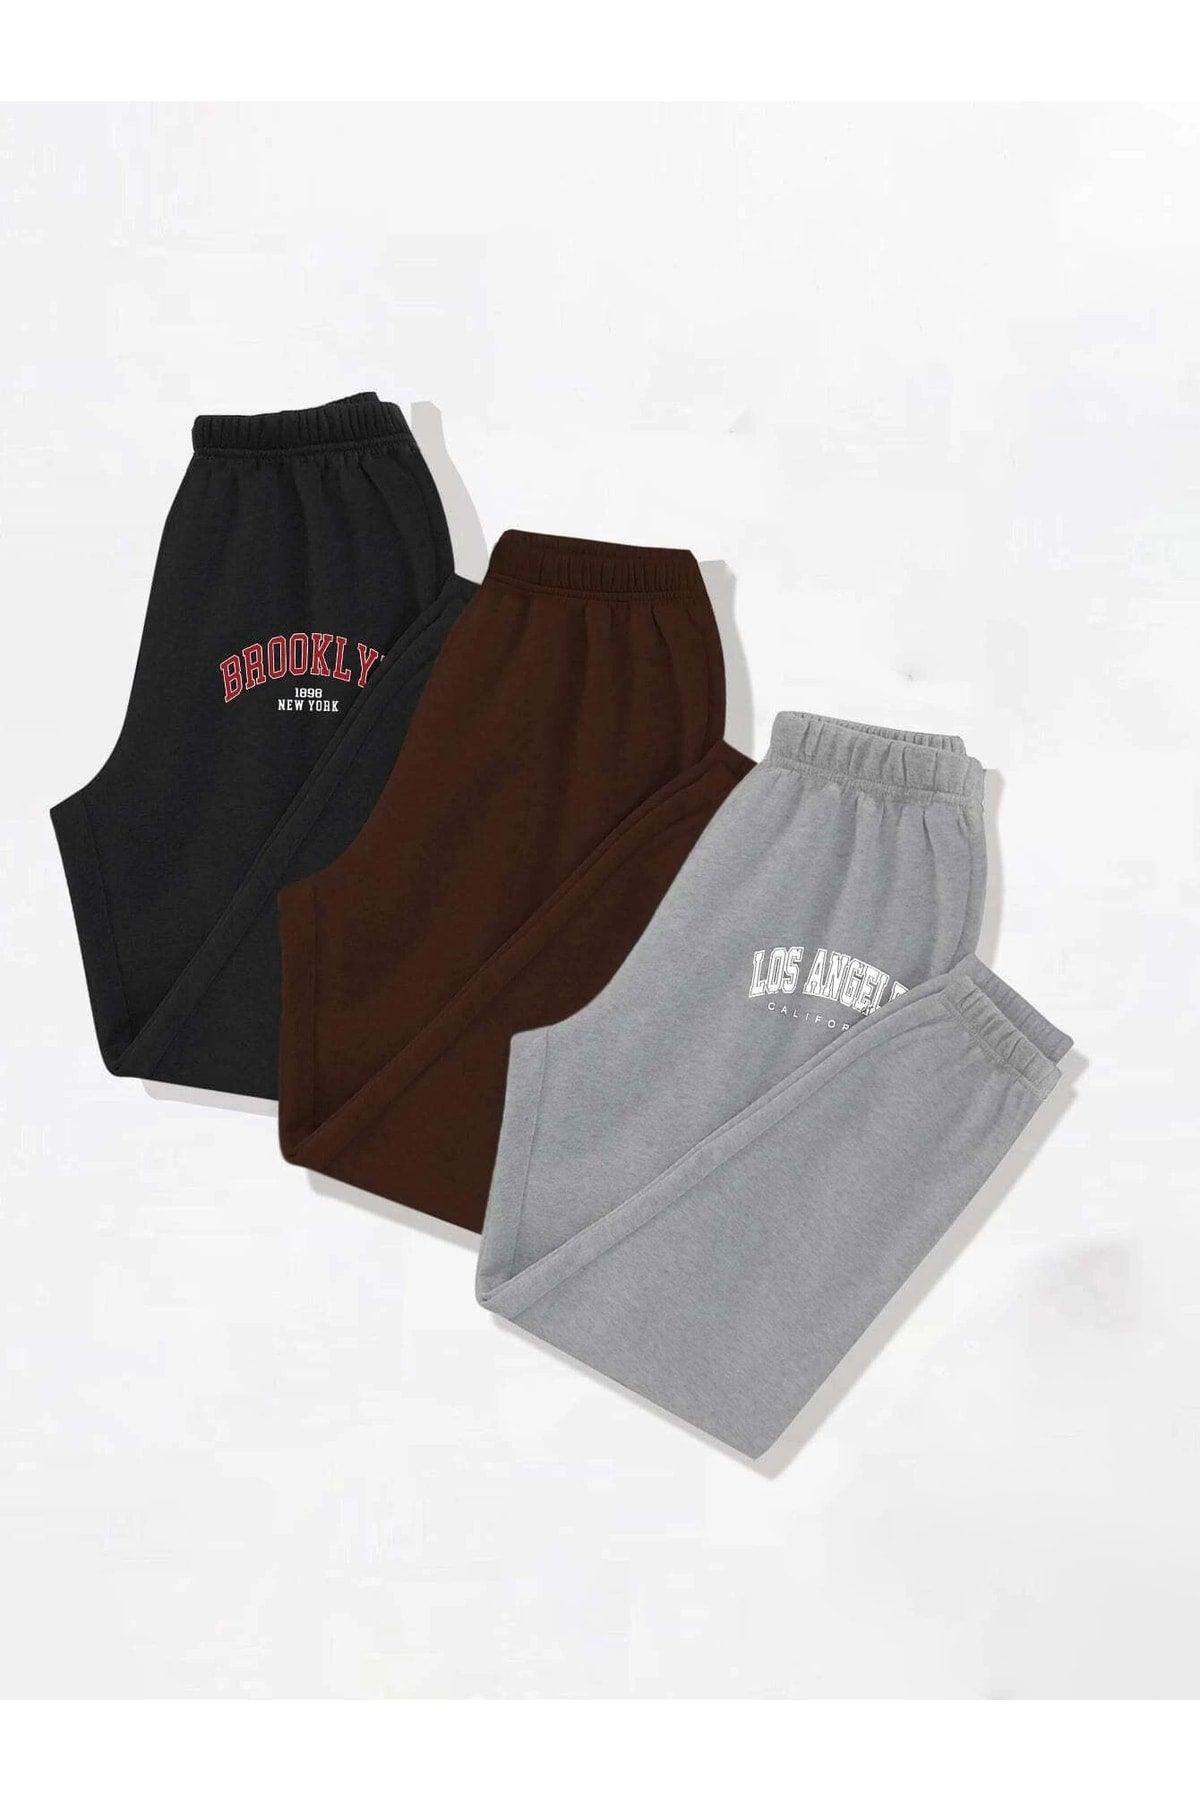 3-pack City Printed Jogger Sweatpants - Black, Gray And Brown, Elastic Legs, High Waist, Summer - Swordslife